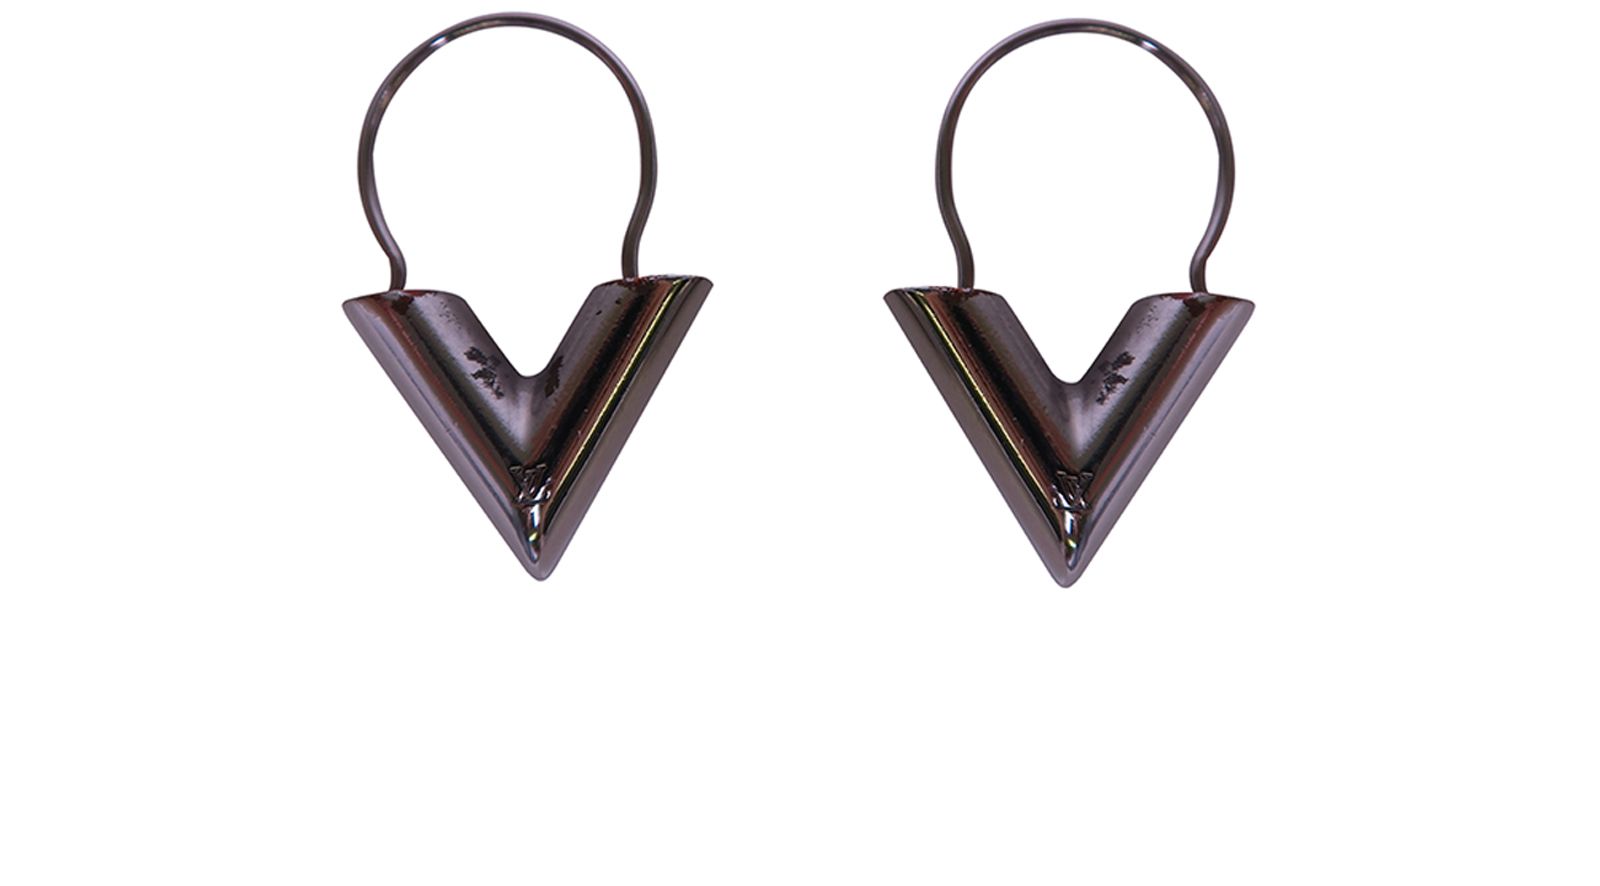 Louis Vuitton Hoops Earrings -  UK